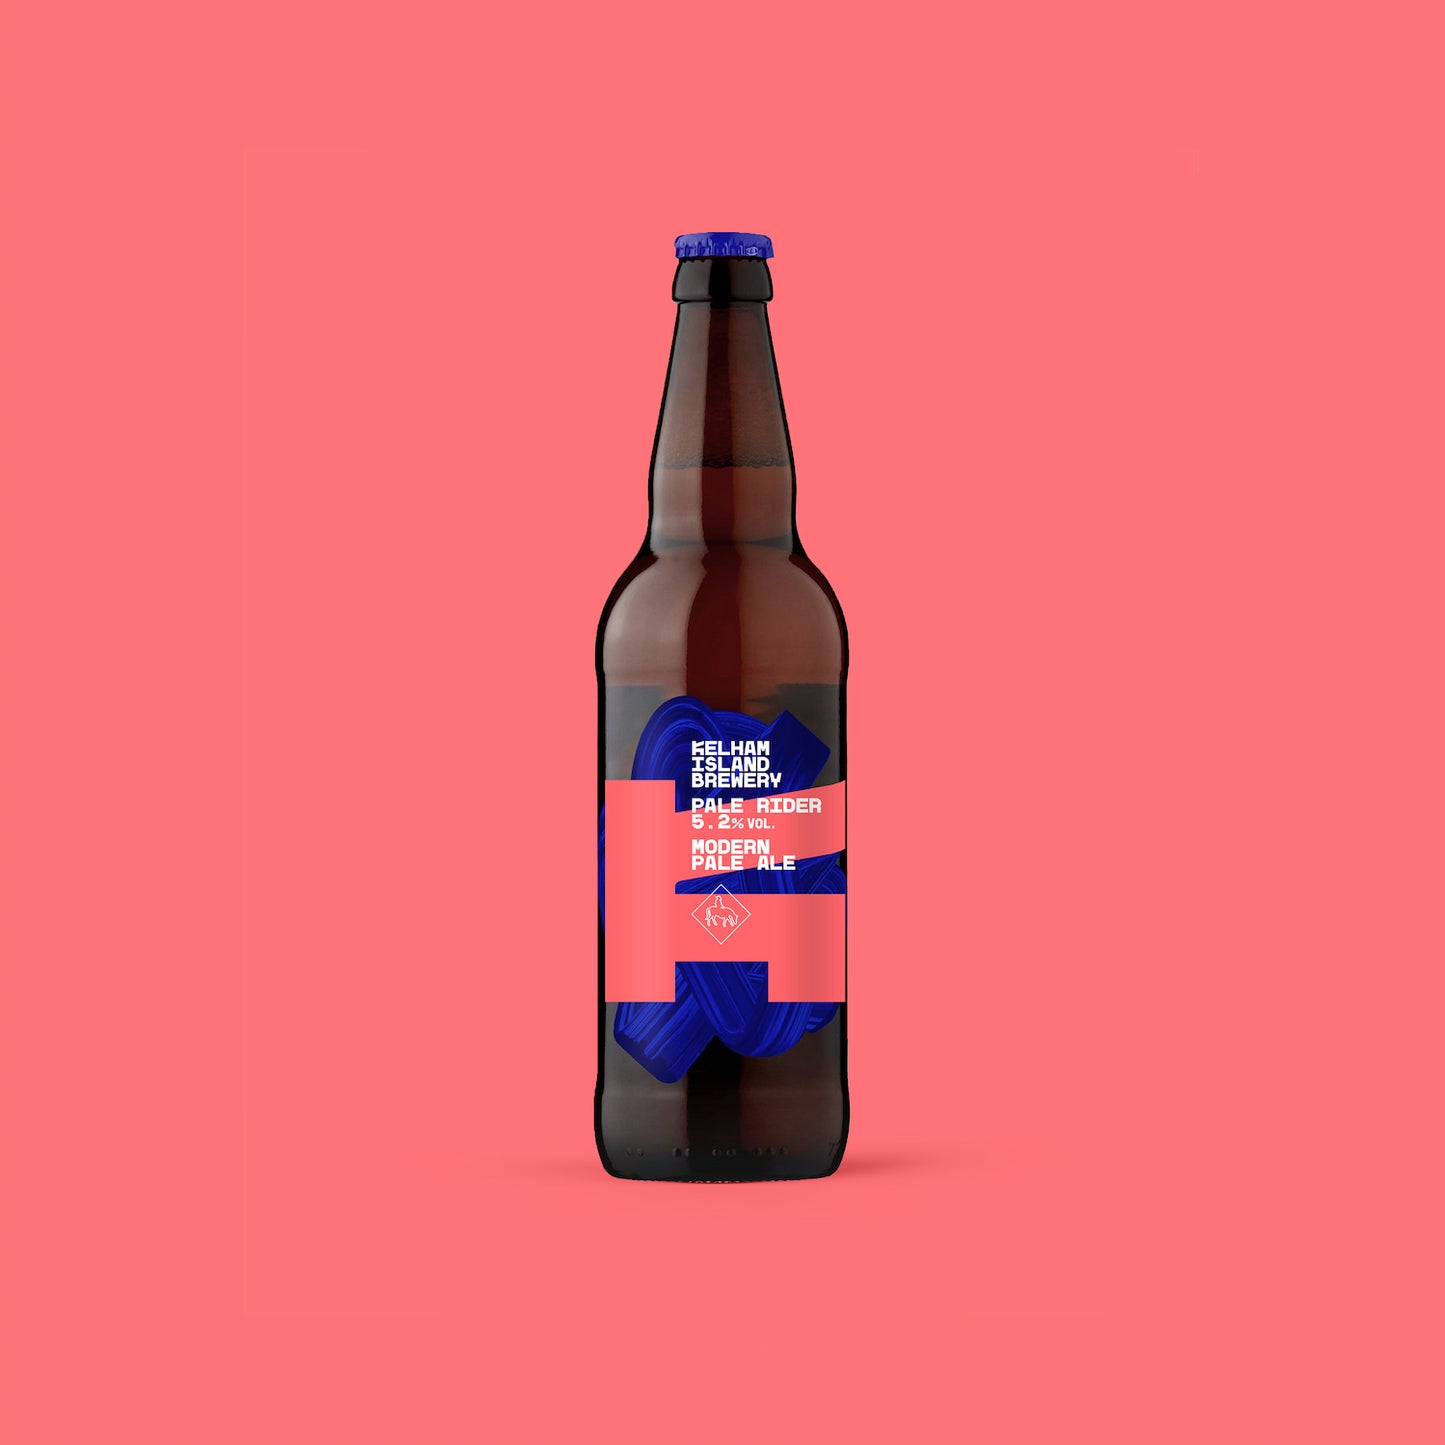 Pale Rider, 5.2% Pale Ale 500ml bottle Beer - Single Bottle Thornbridge